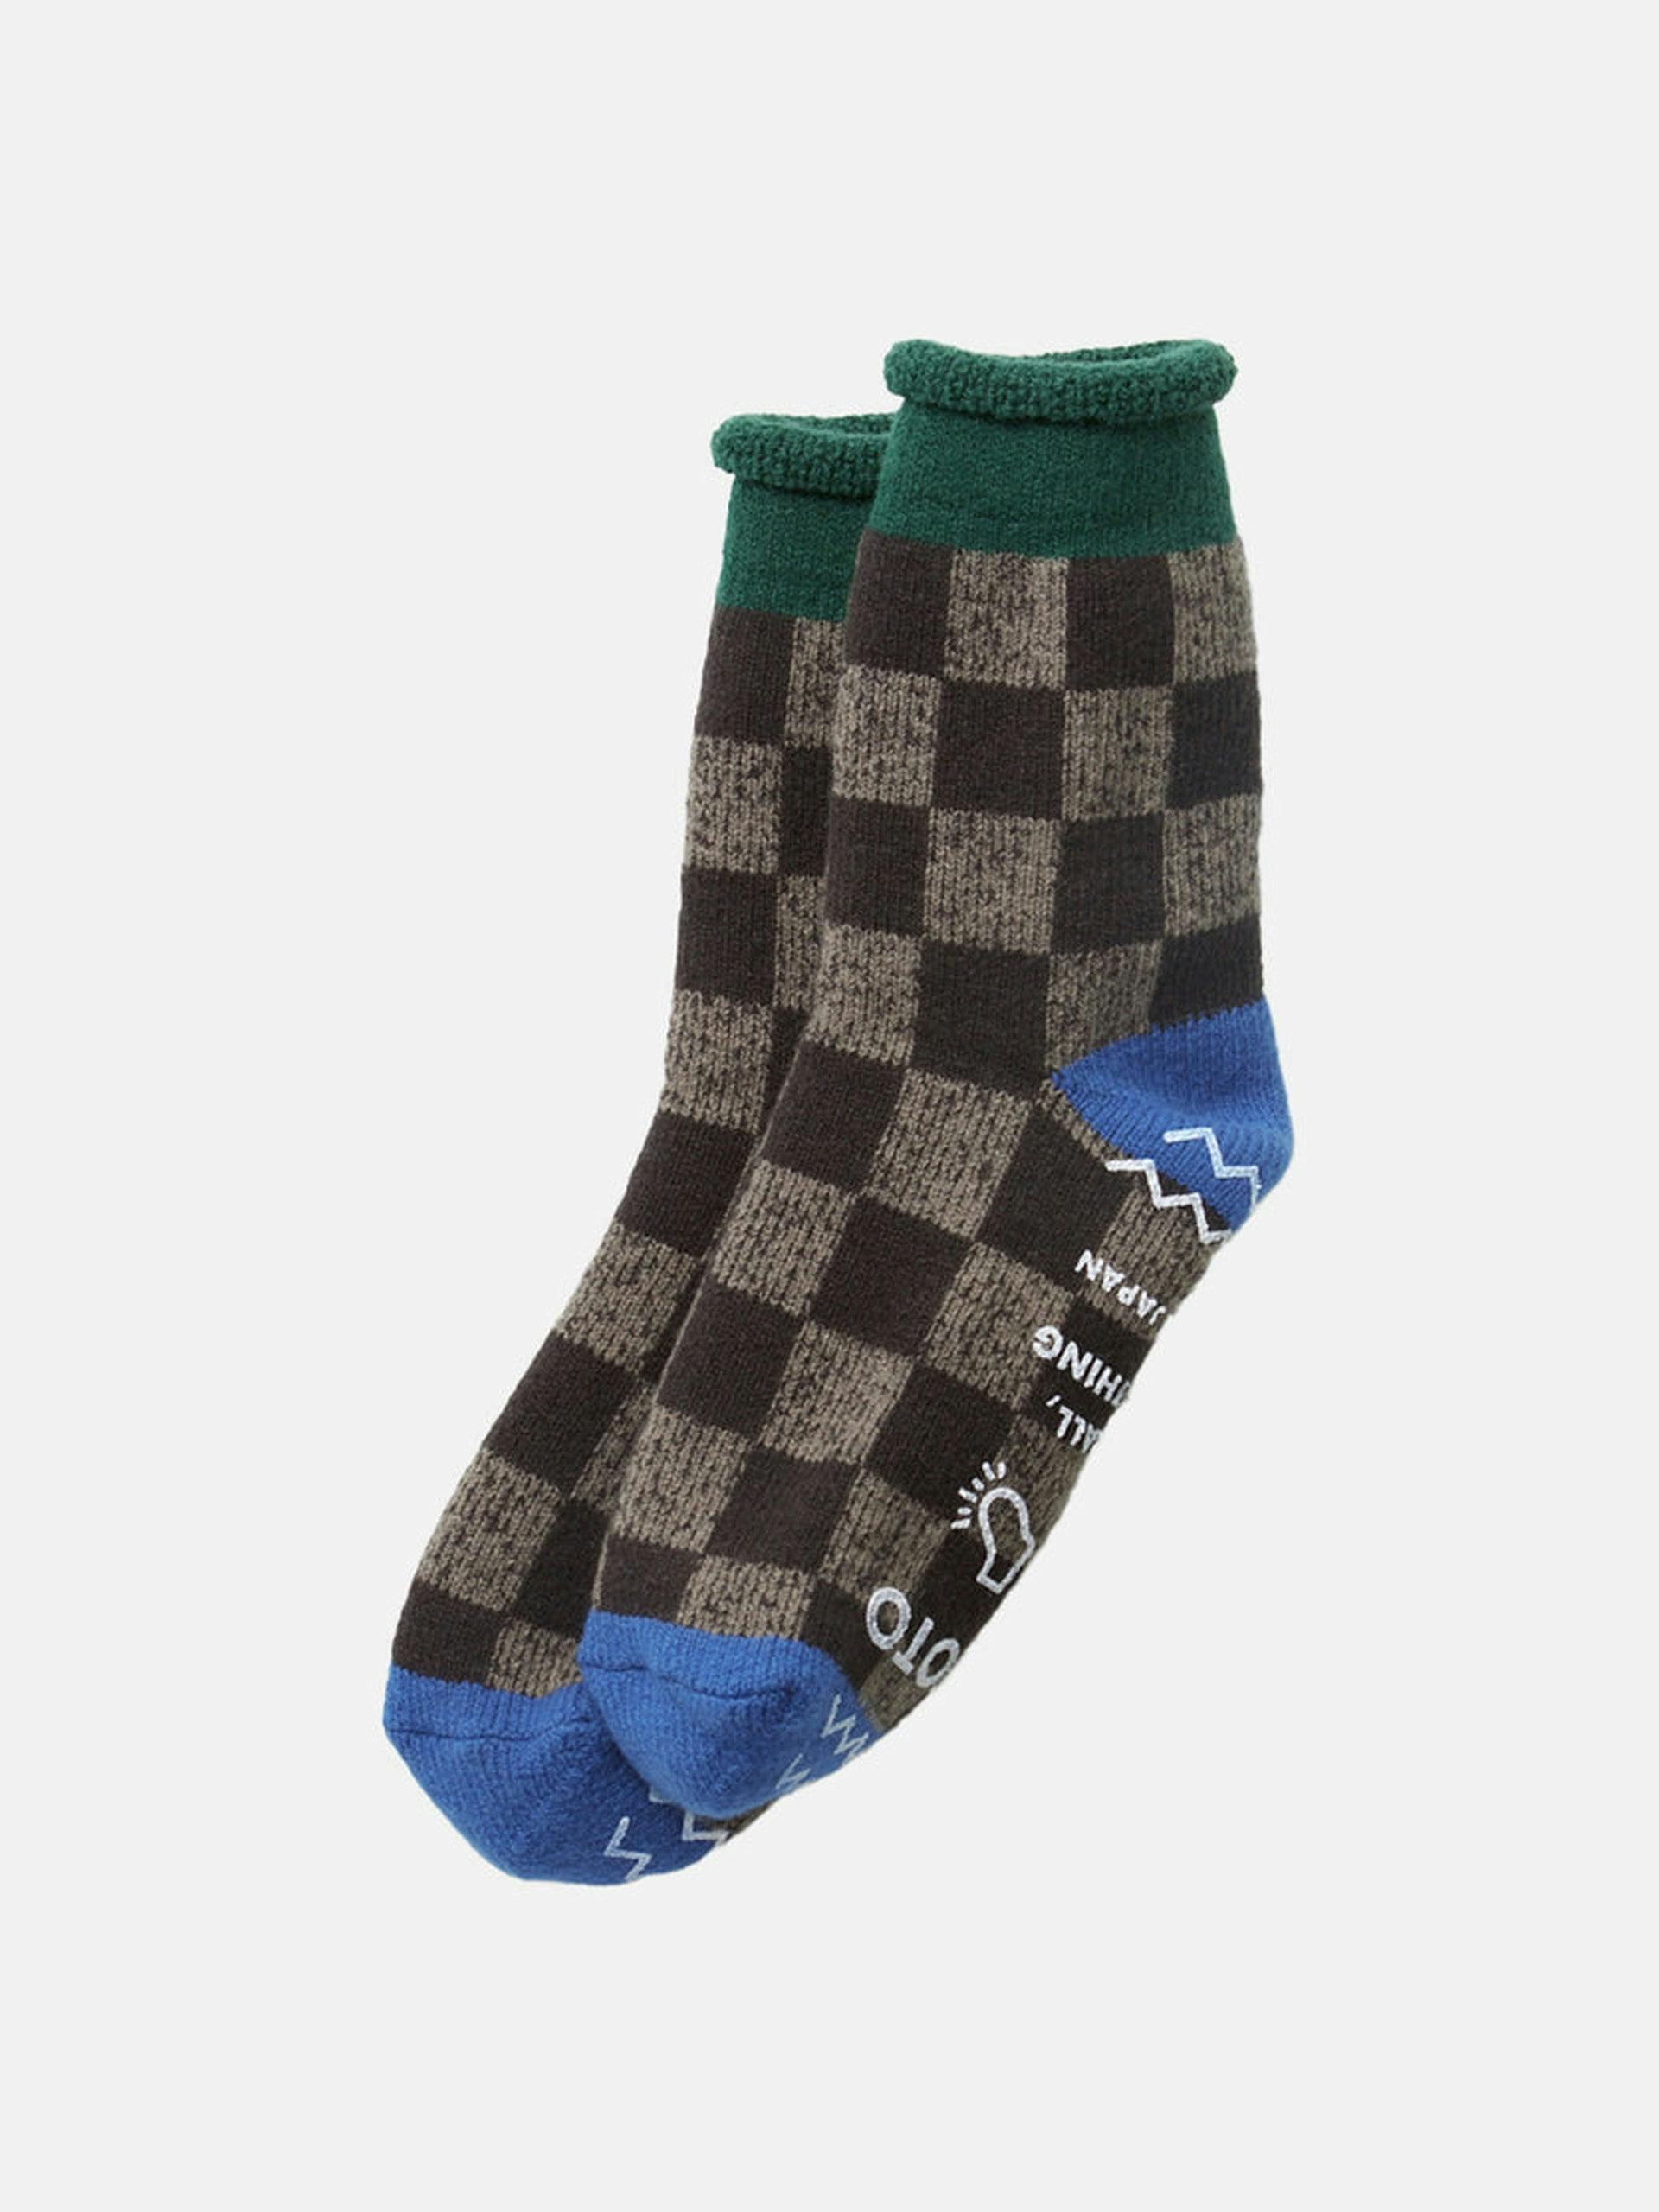 Checkerboard socks